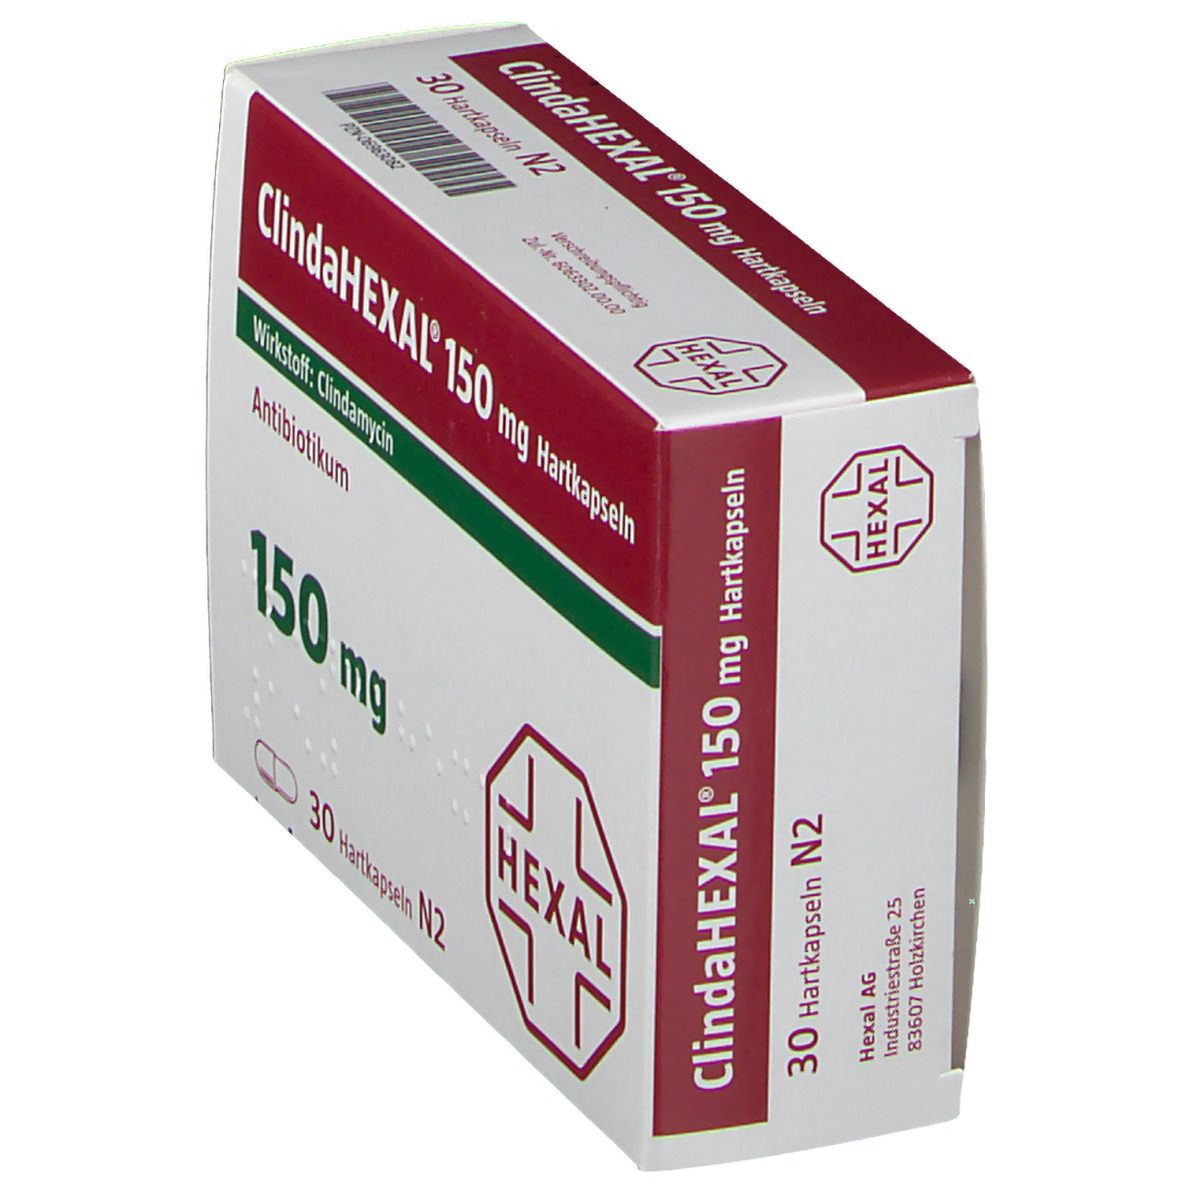 ClindaHEXAL® 150 mg